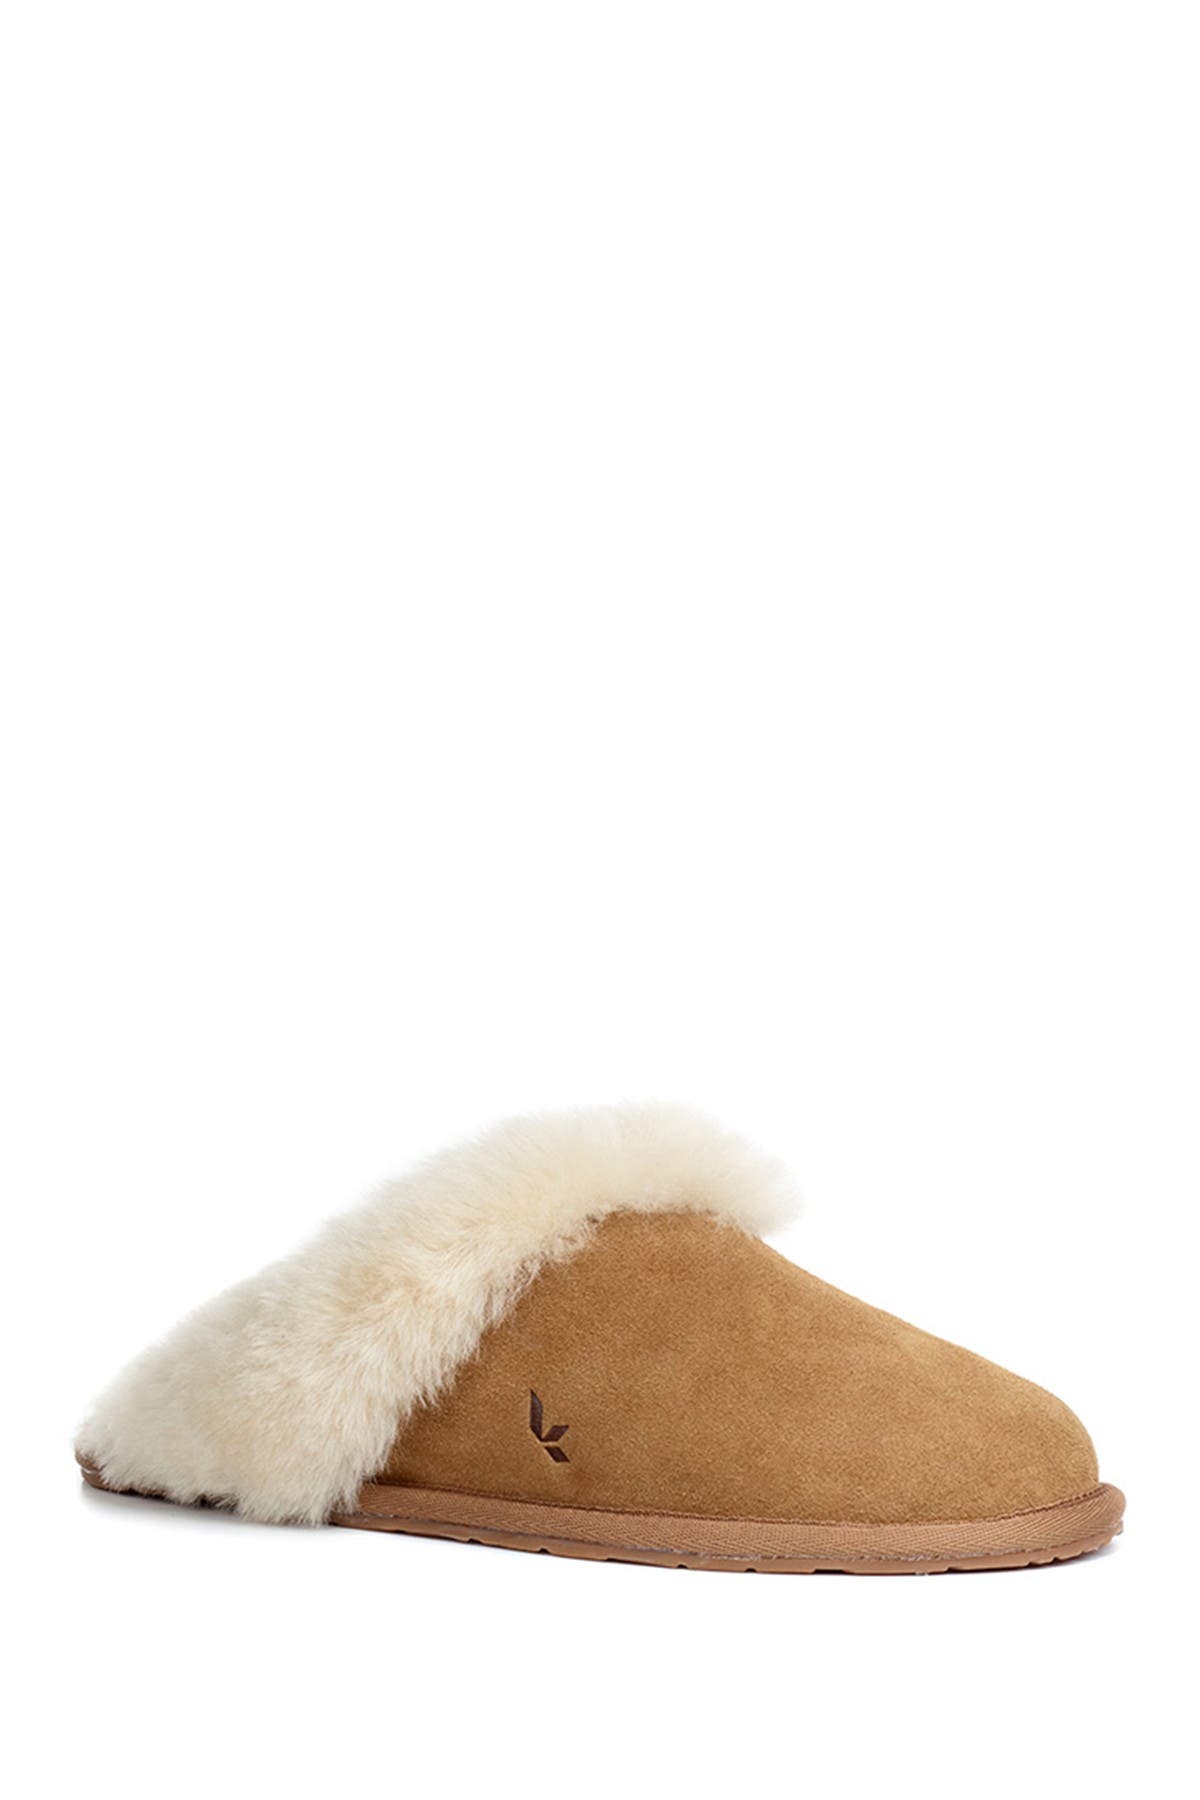 nordstrom fuzzy slippers